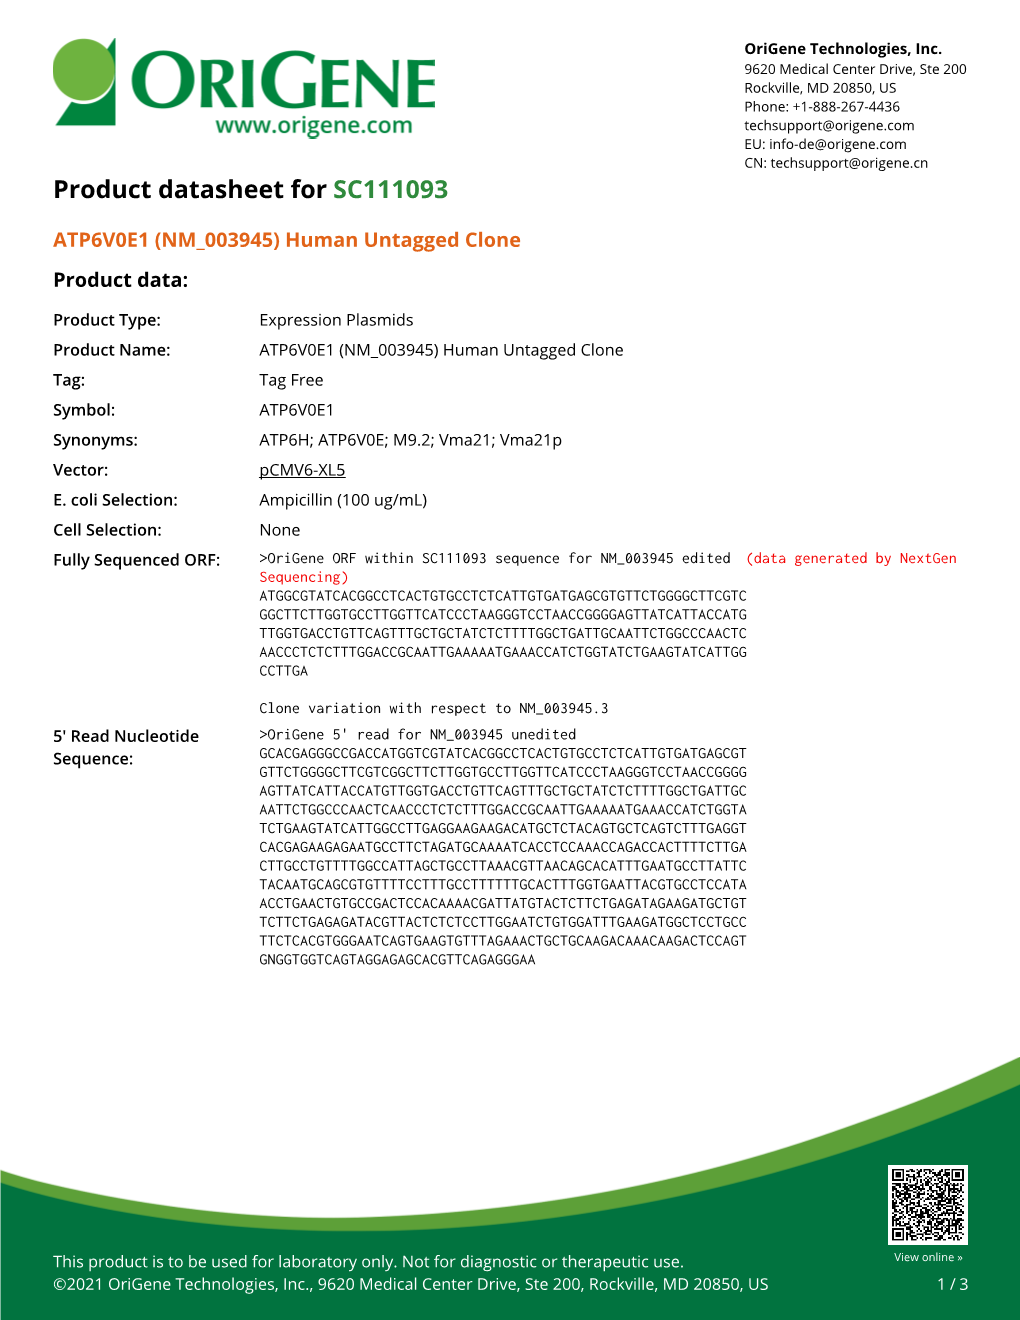 ATP6V0E1 (NM 003945) Human Untagged Clone – SC111093 | Origene